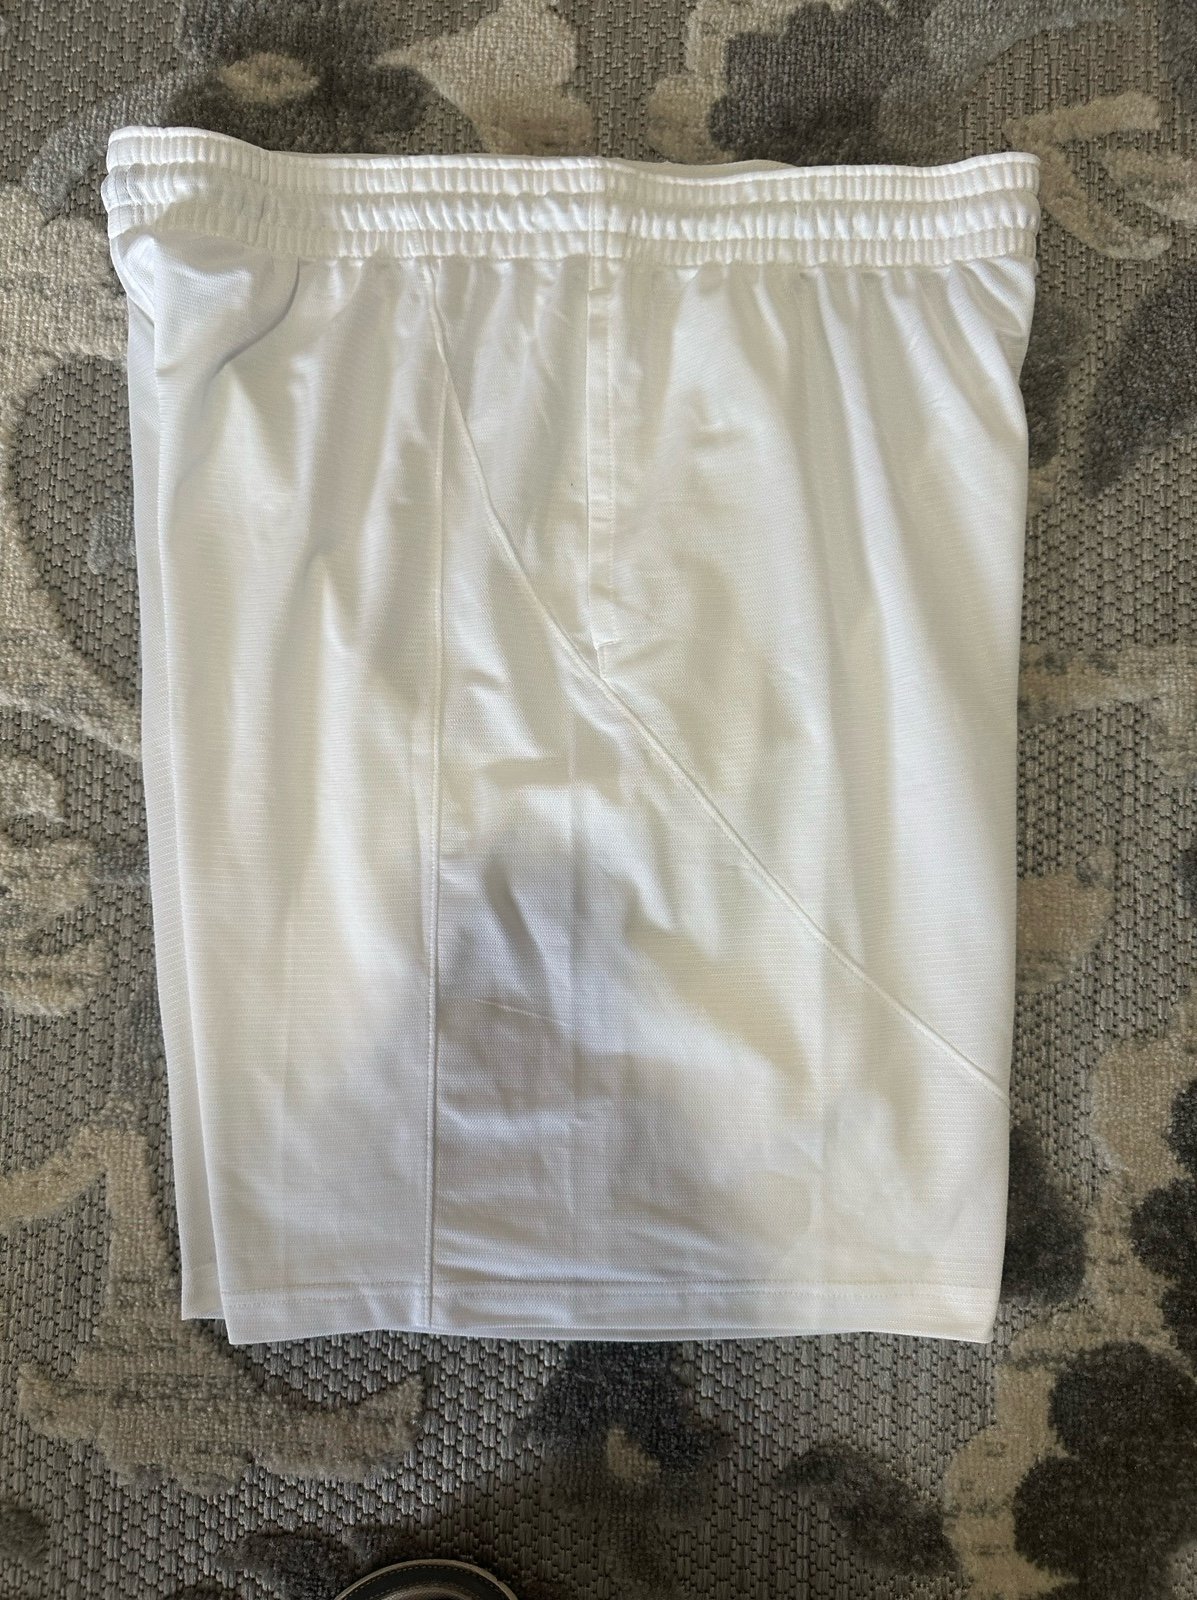 High quality Nike shorts White 3xl nOu8T0umP best sale